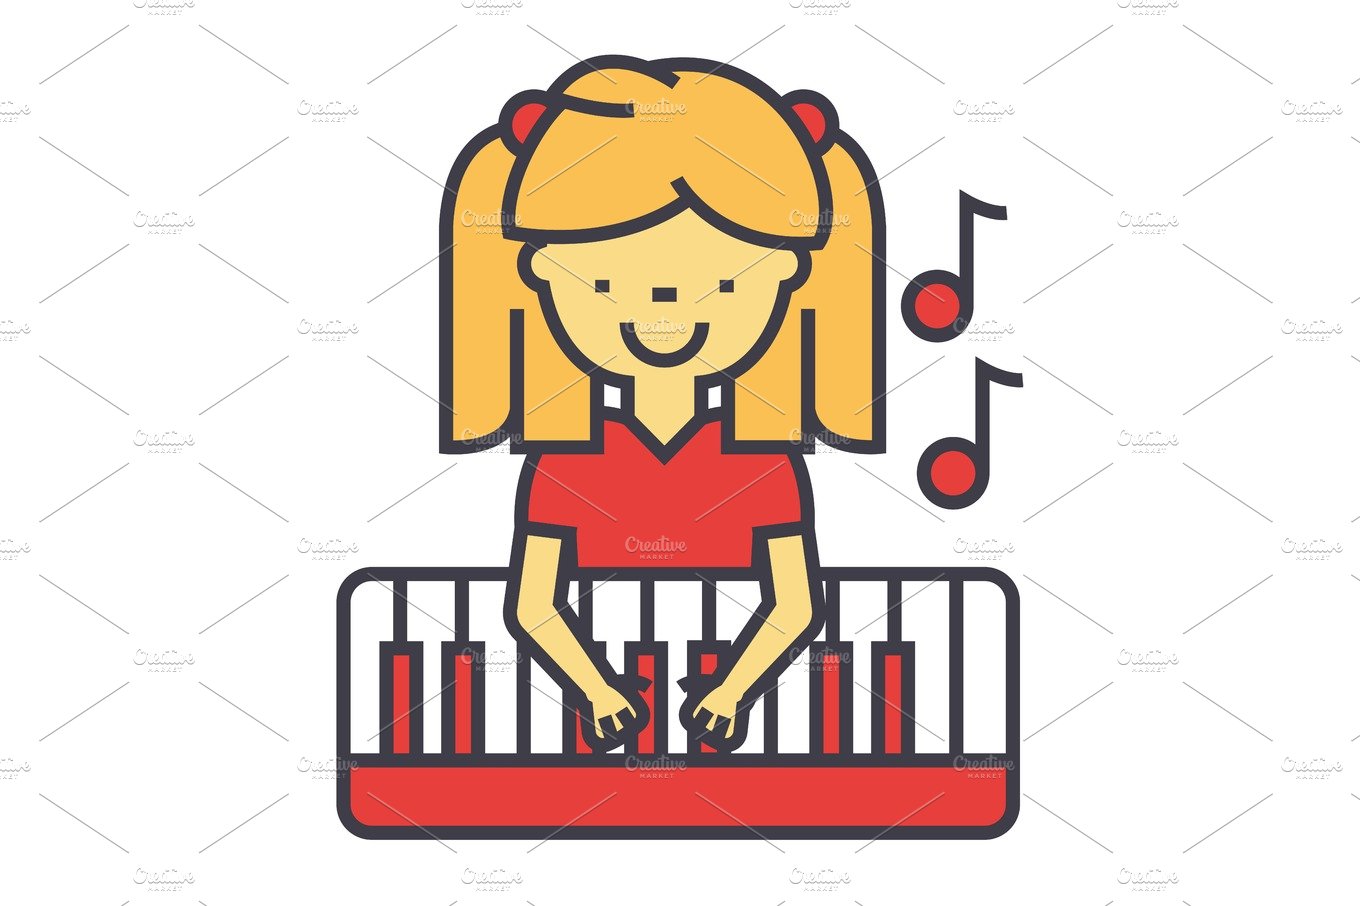 girl playing piano clip art